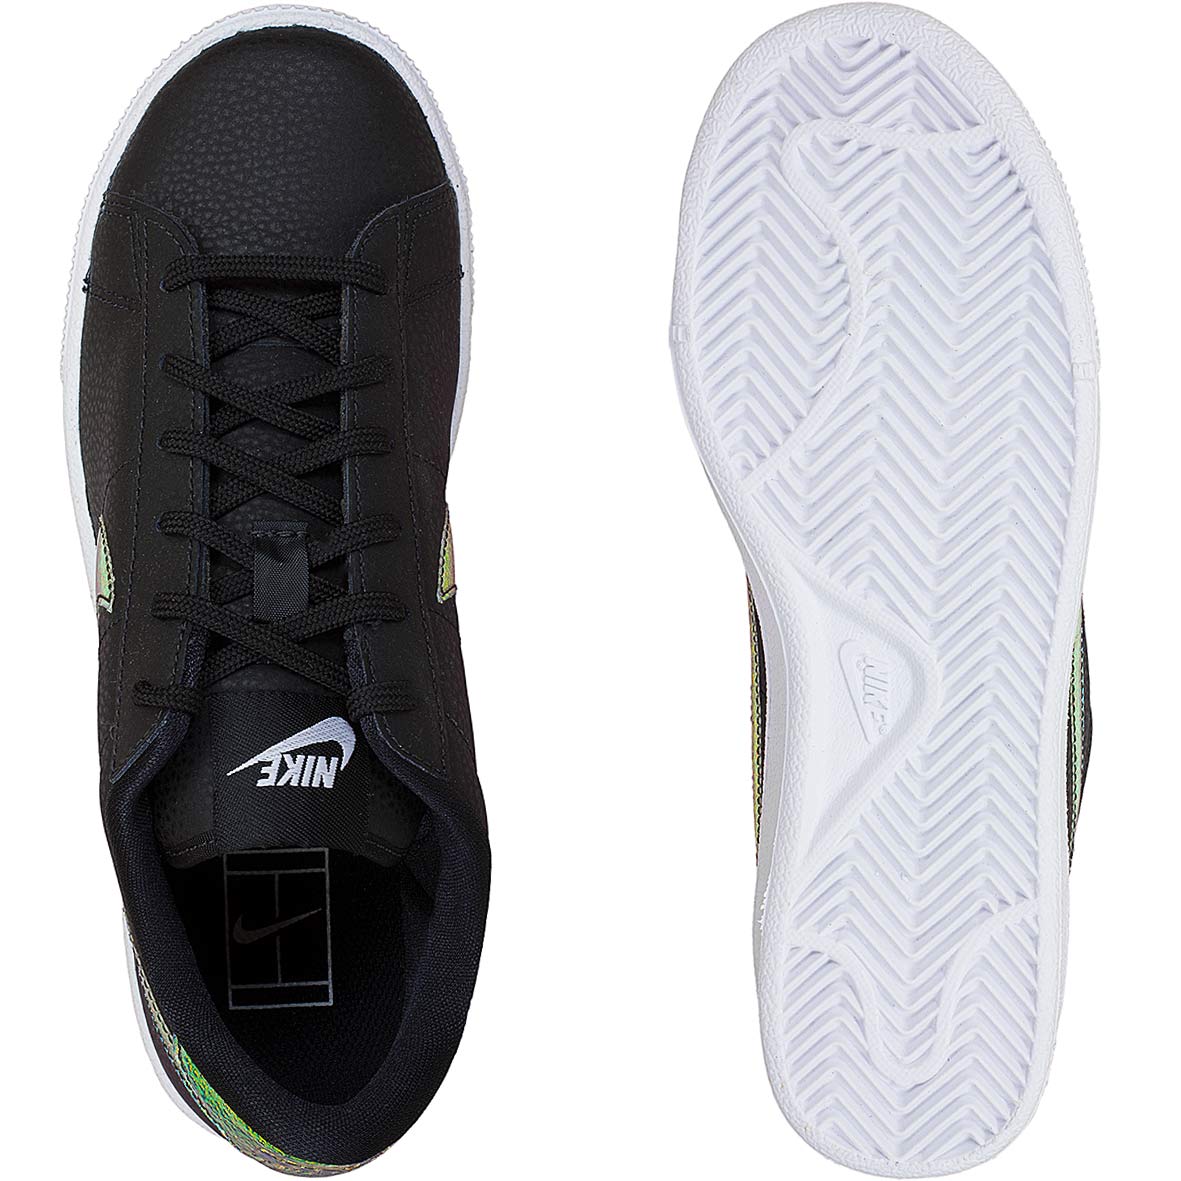 ☆ Nike Damen Sneaker Tennis Classic Premium schwarz/weiß - hier bestellen!